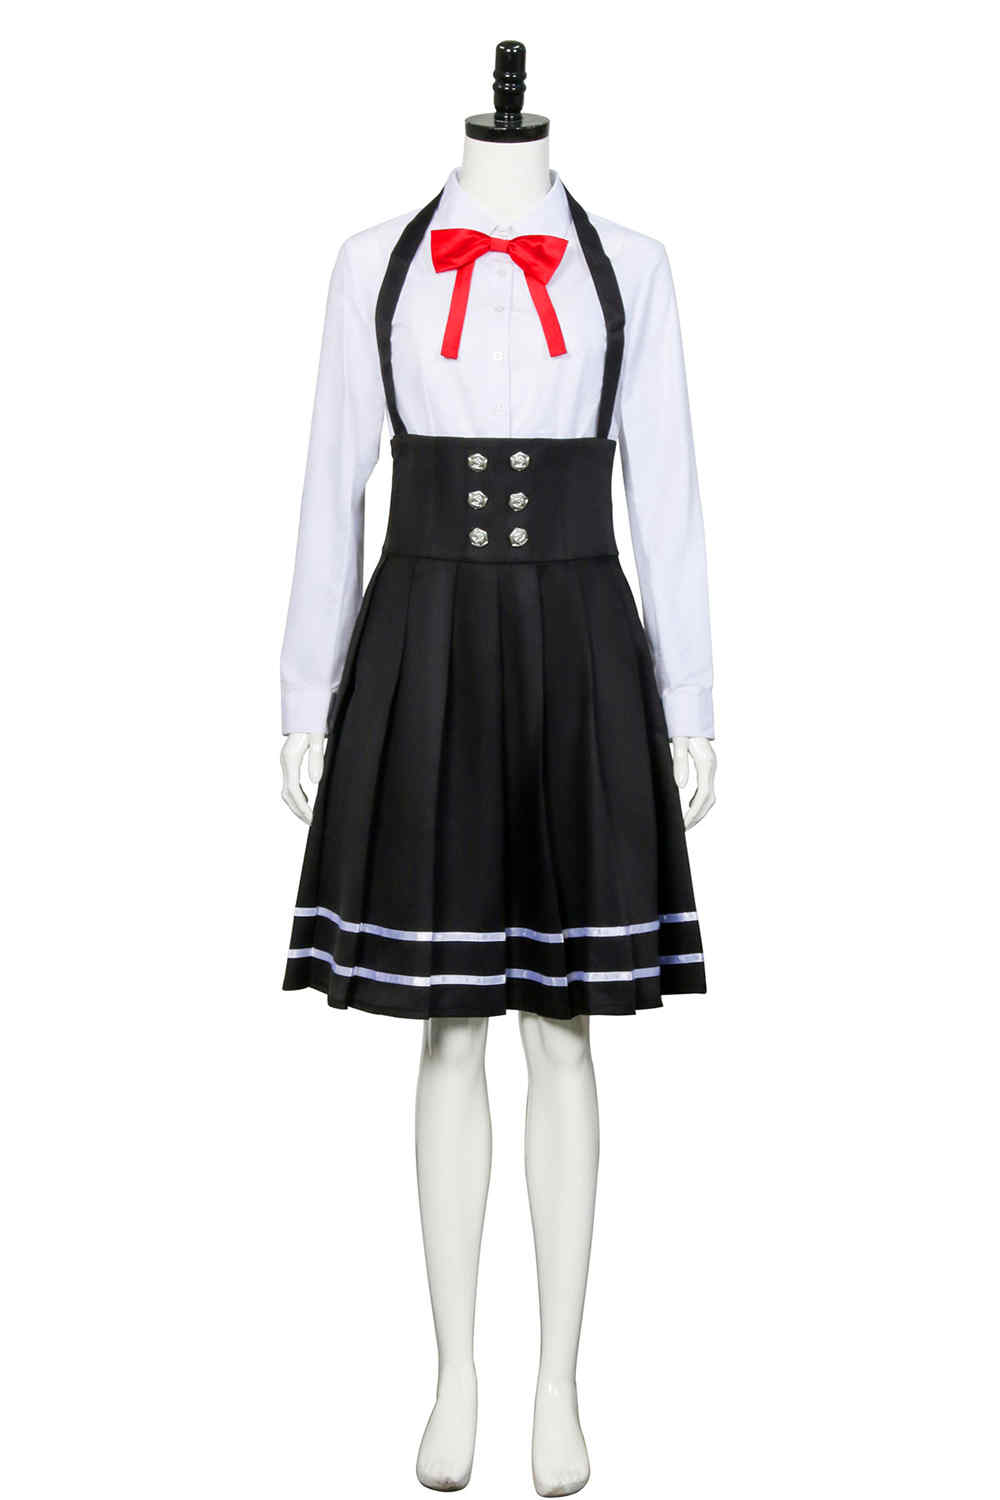 anime dangabronpa v3 shirogane tsumugi escolar uniforme escolar Sopks Outfit Halloween Carnival Costume Cosplay